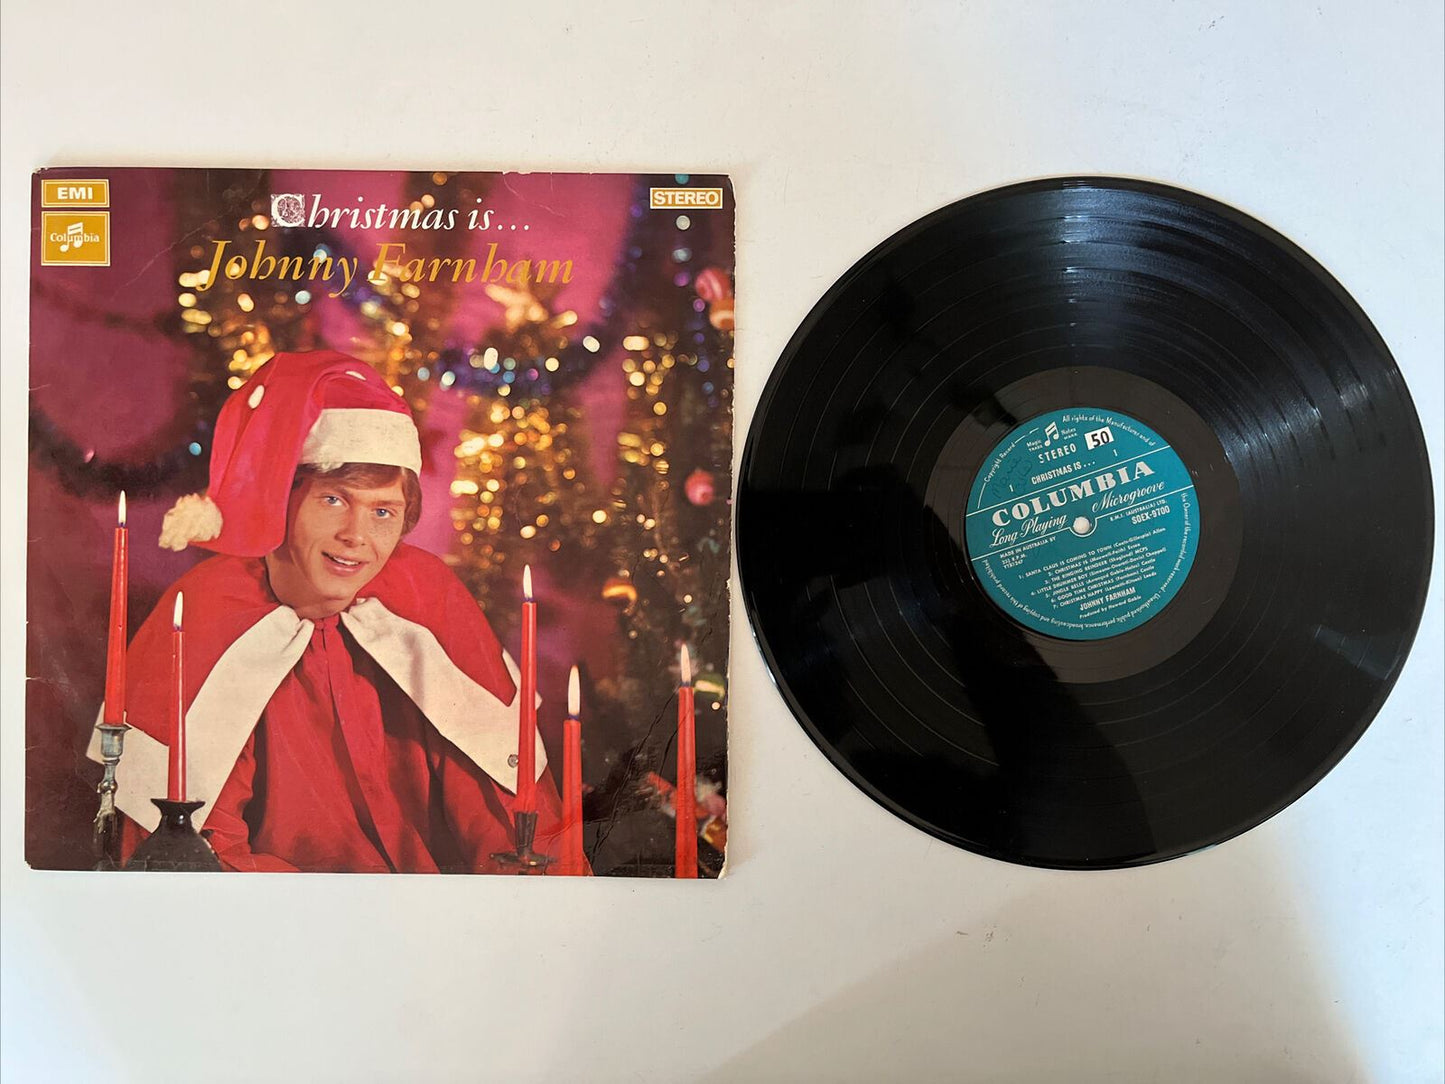 Johnny Farnham – Christmas Is... Johnny Farnham 1970 Vinyl Record LP